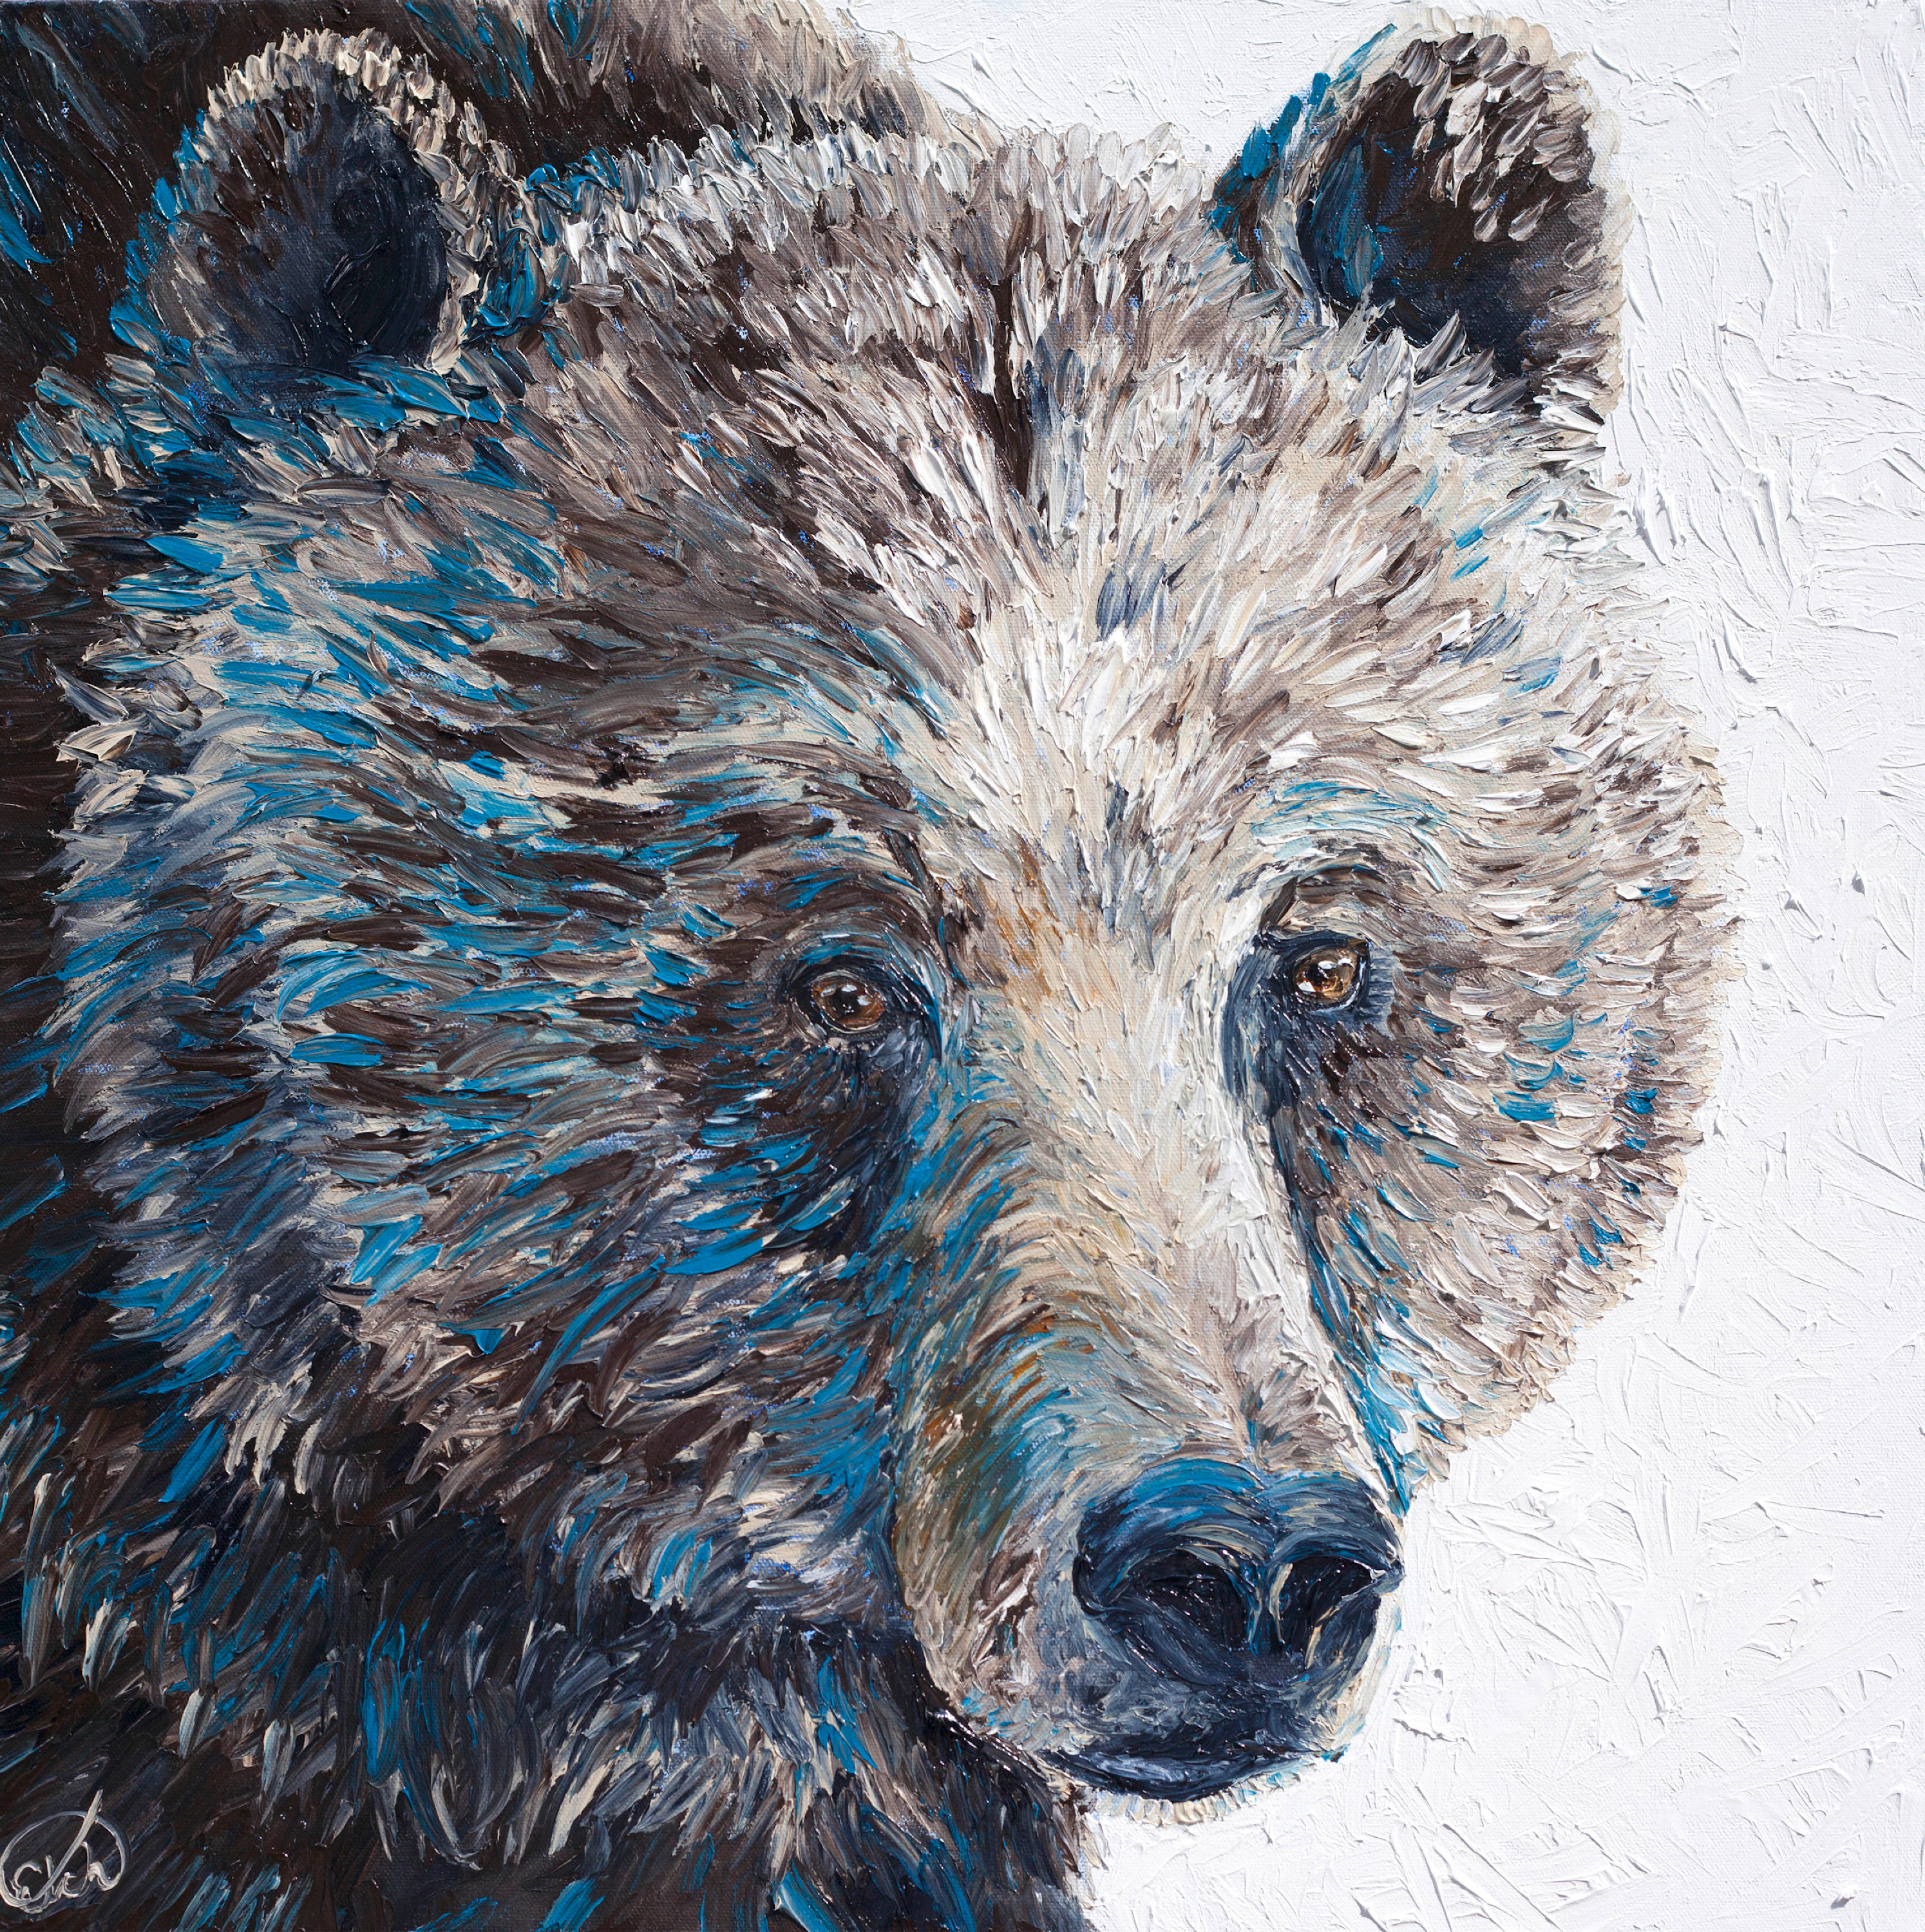 Elizabeth mordensky  portrait of a grizzly bear   oil finger painting  24x24 ornwep